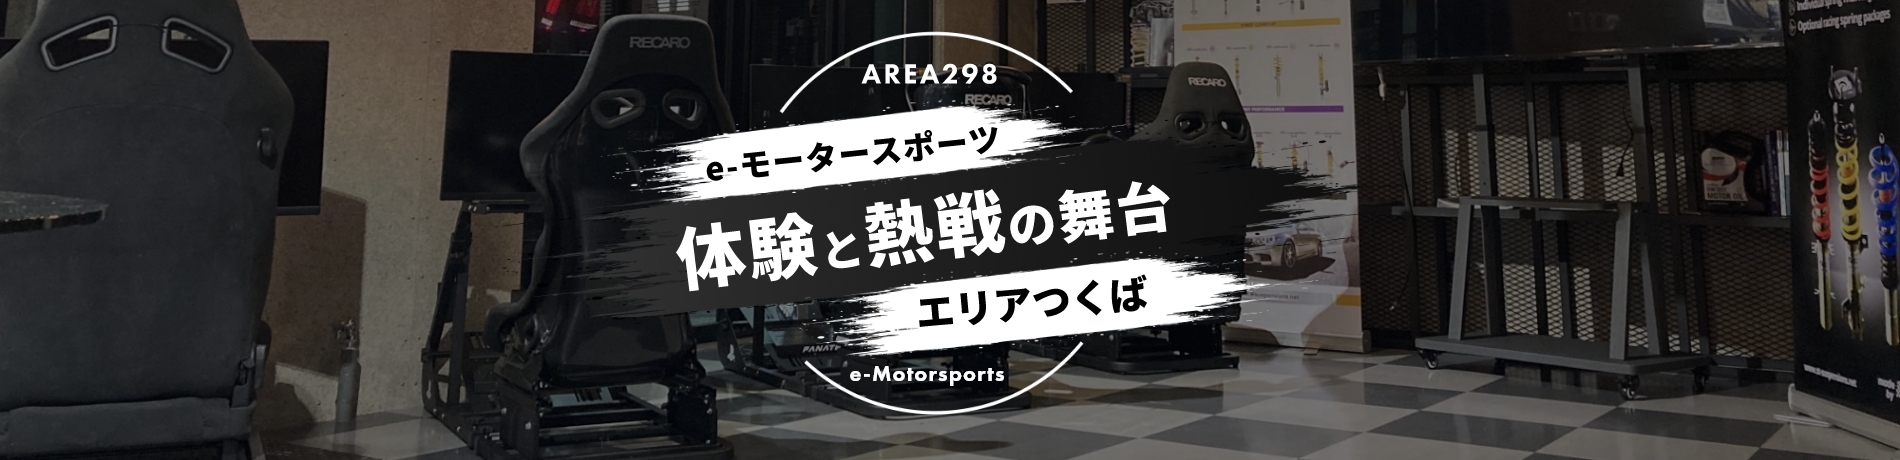 e-Motorsports AREA298 エリアつくば